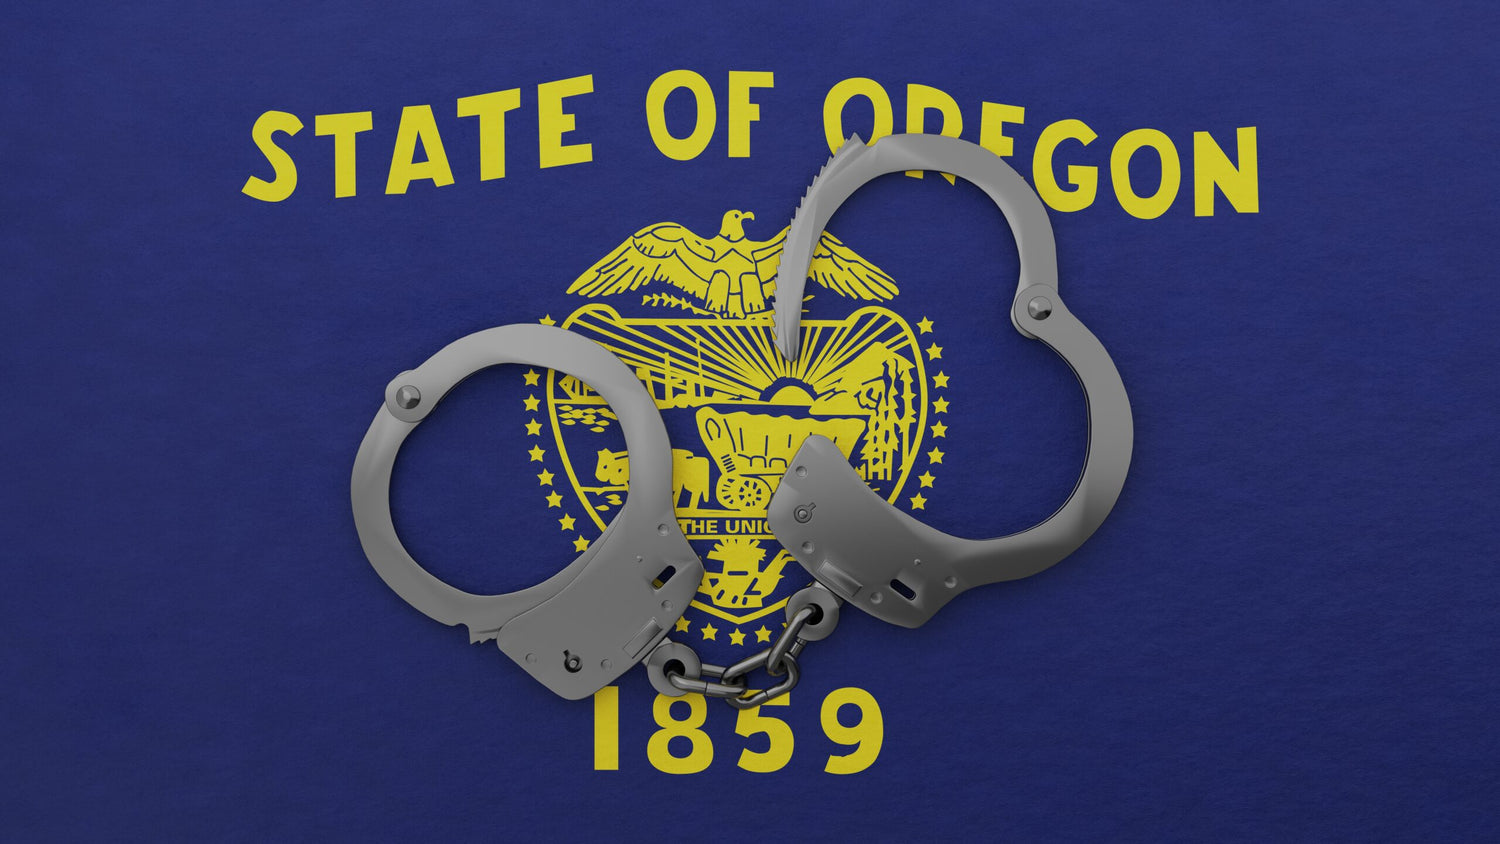 A Look Back At Measure 110 & The Impact of Drug Decriminalization In Oregon